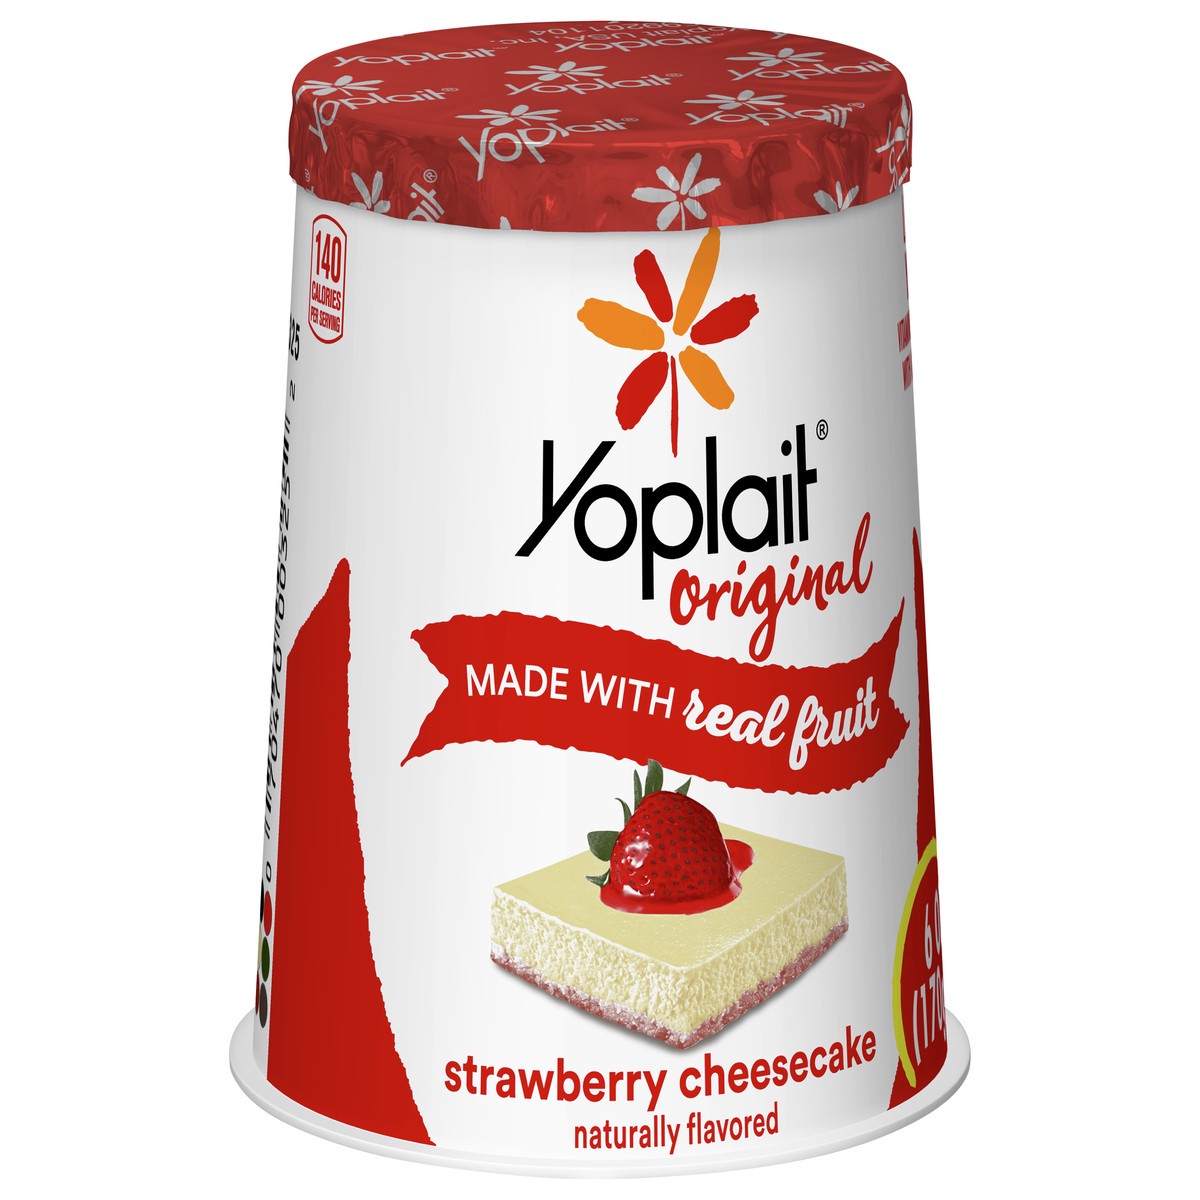 slide 4 of 9, Yoplait Original Strawberry Cheesecake Yogurt, 6 oz